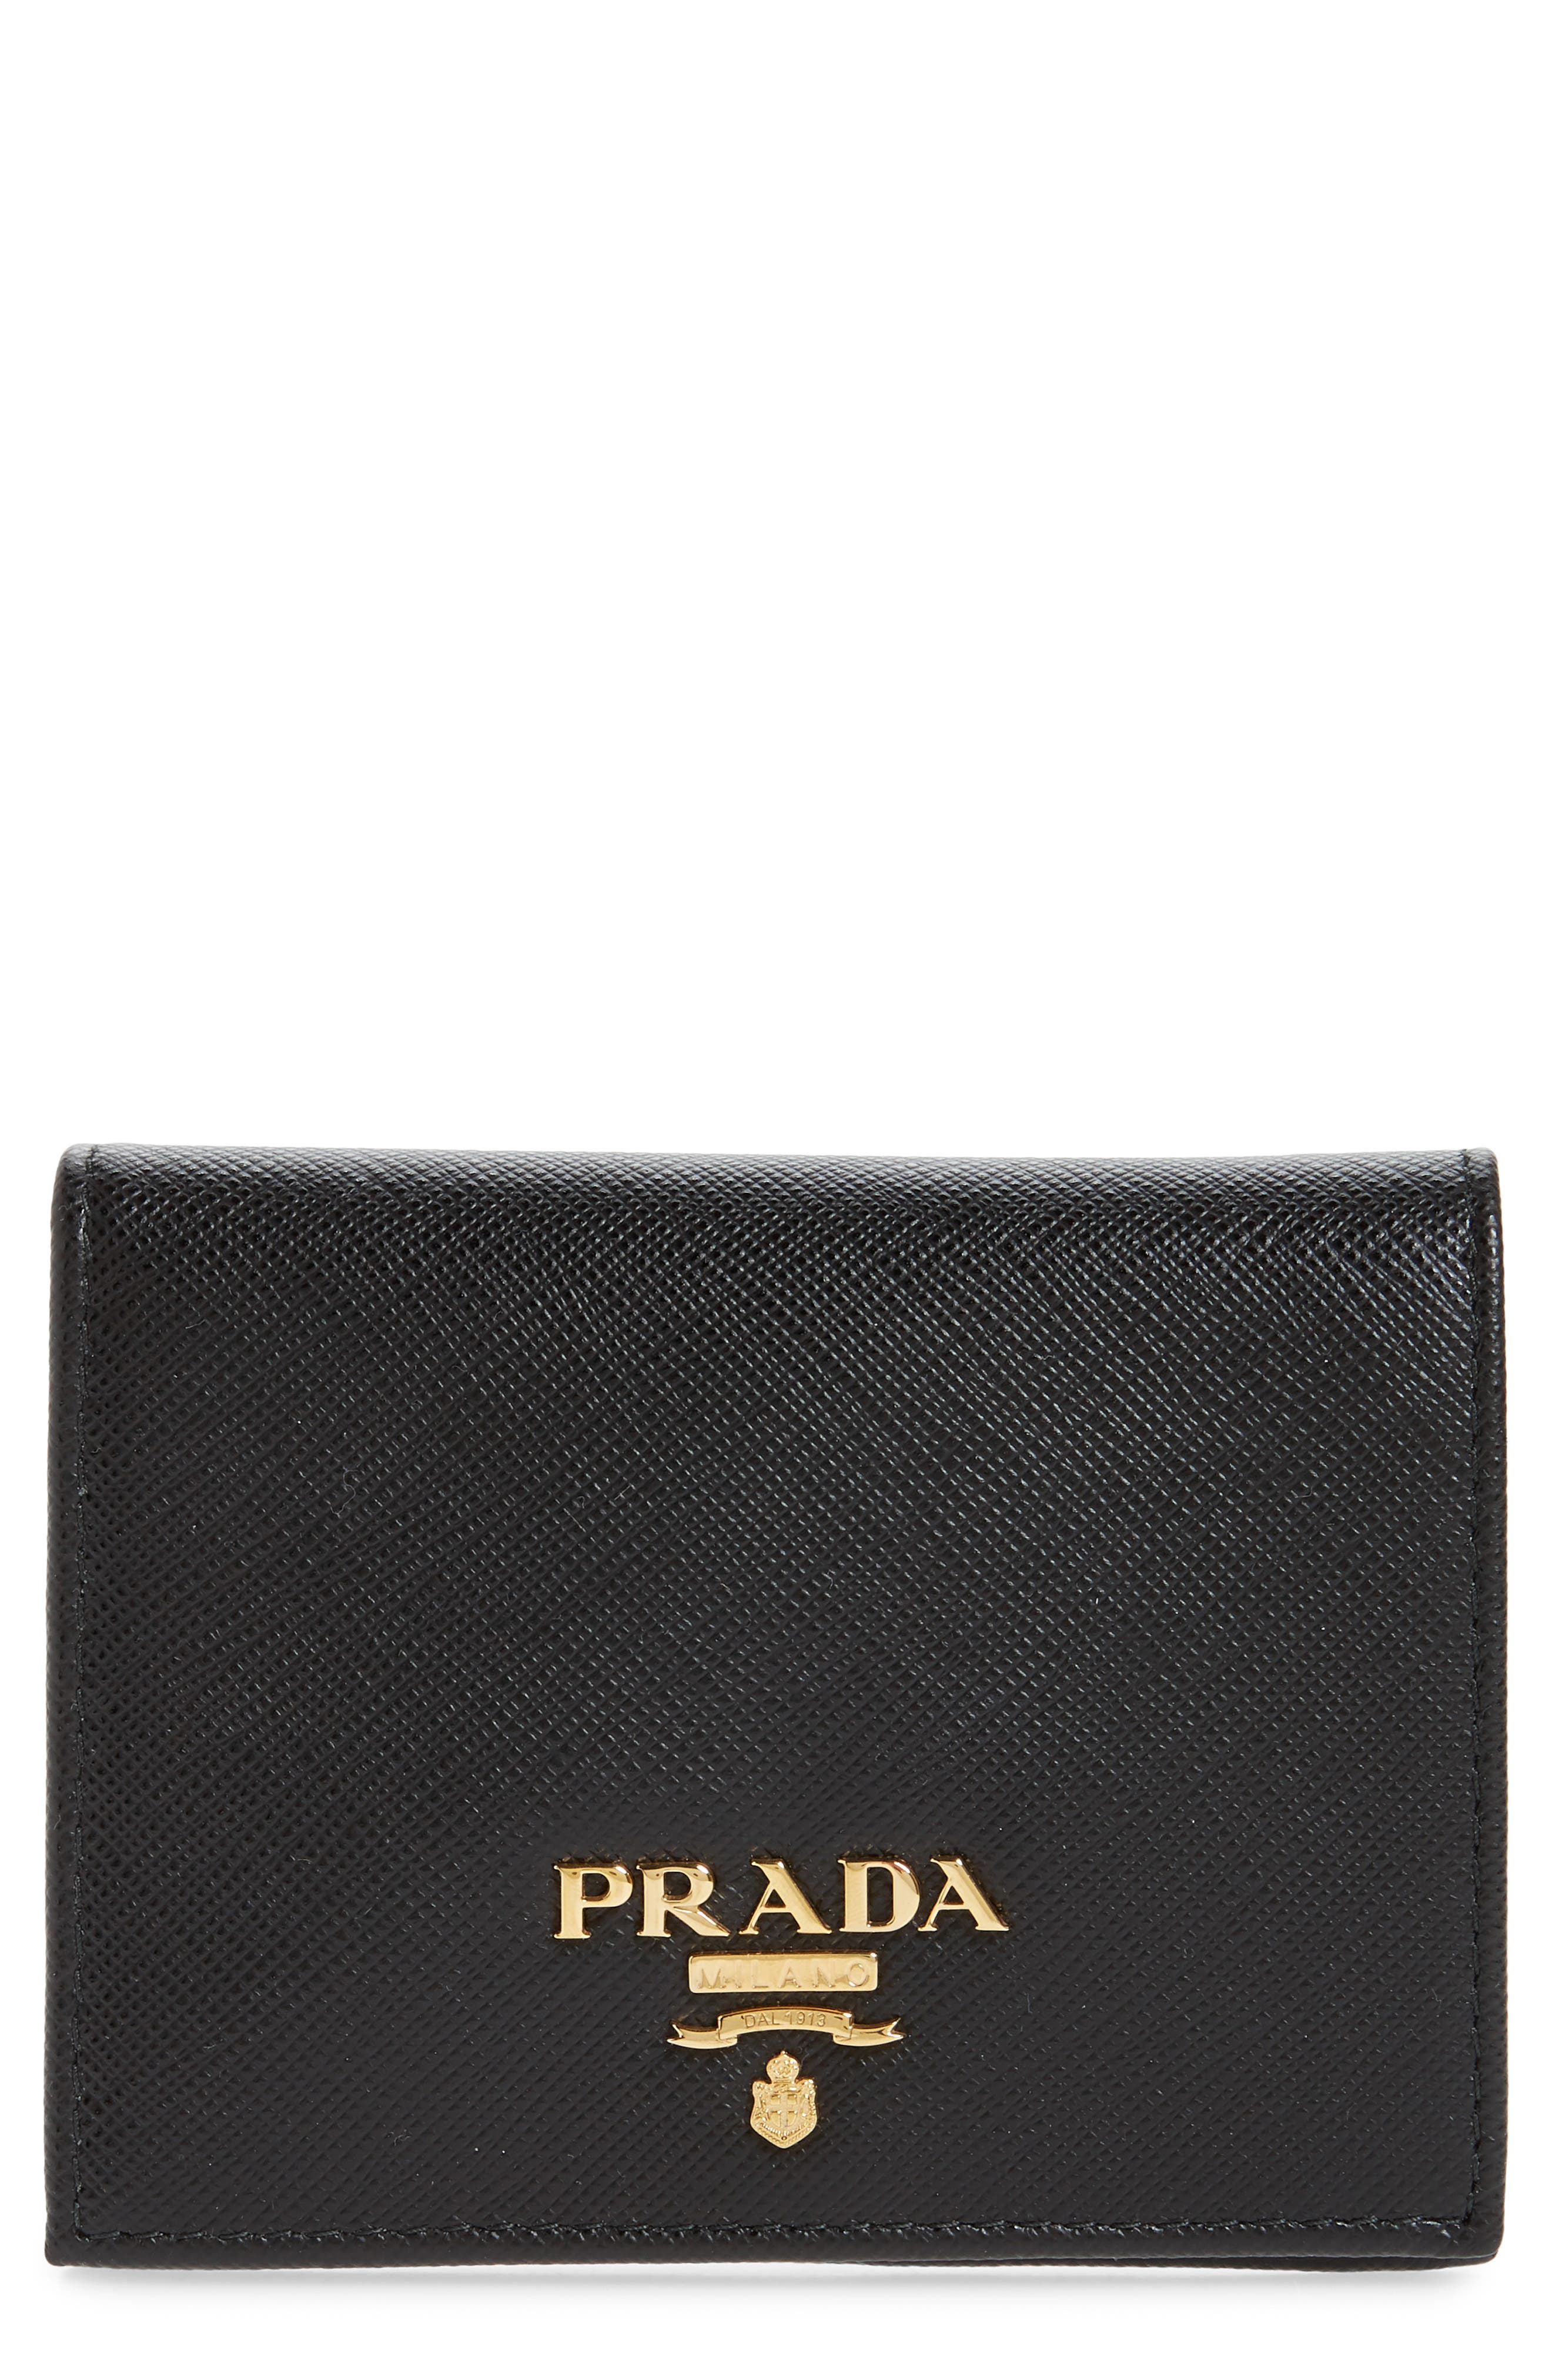 prada saffiano wallet price, OFF 70 